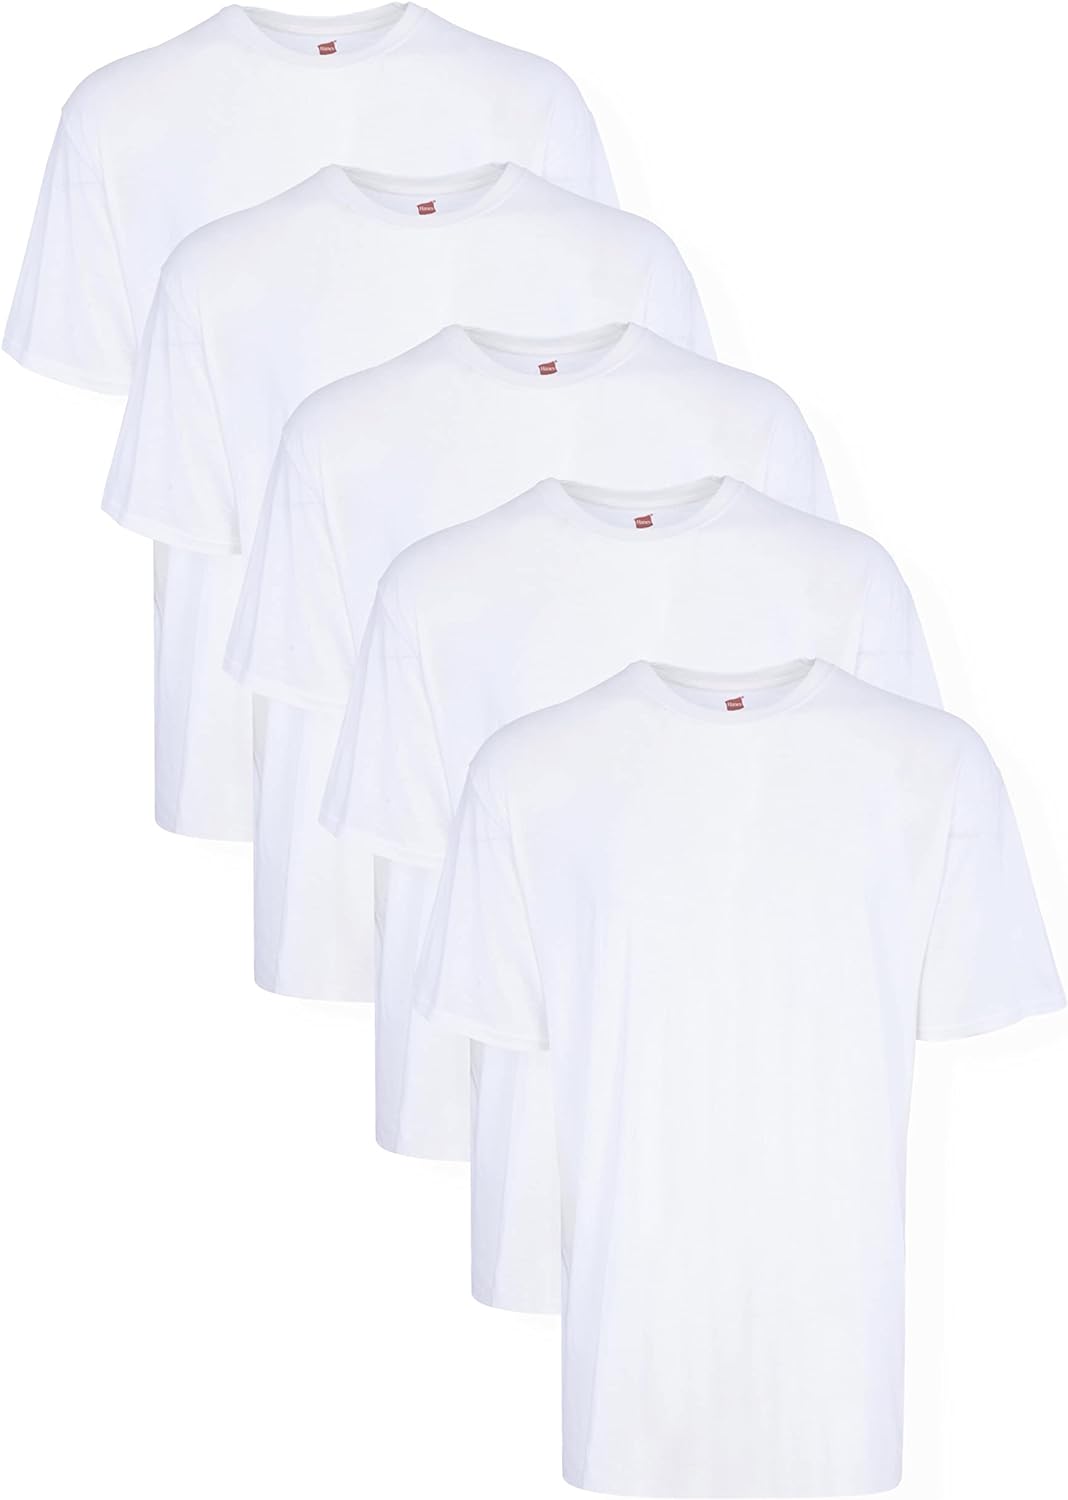 Size Varies Hanes Authentic Men's Plain Crewneck Short Sleeve Tagless T-Shirt